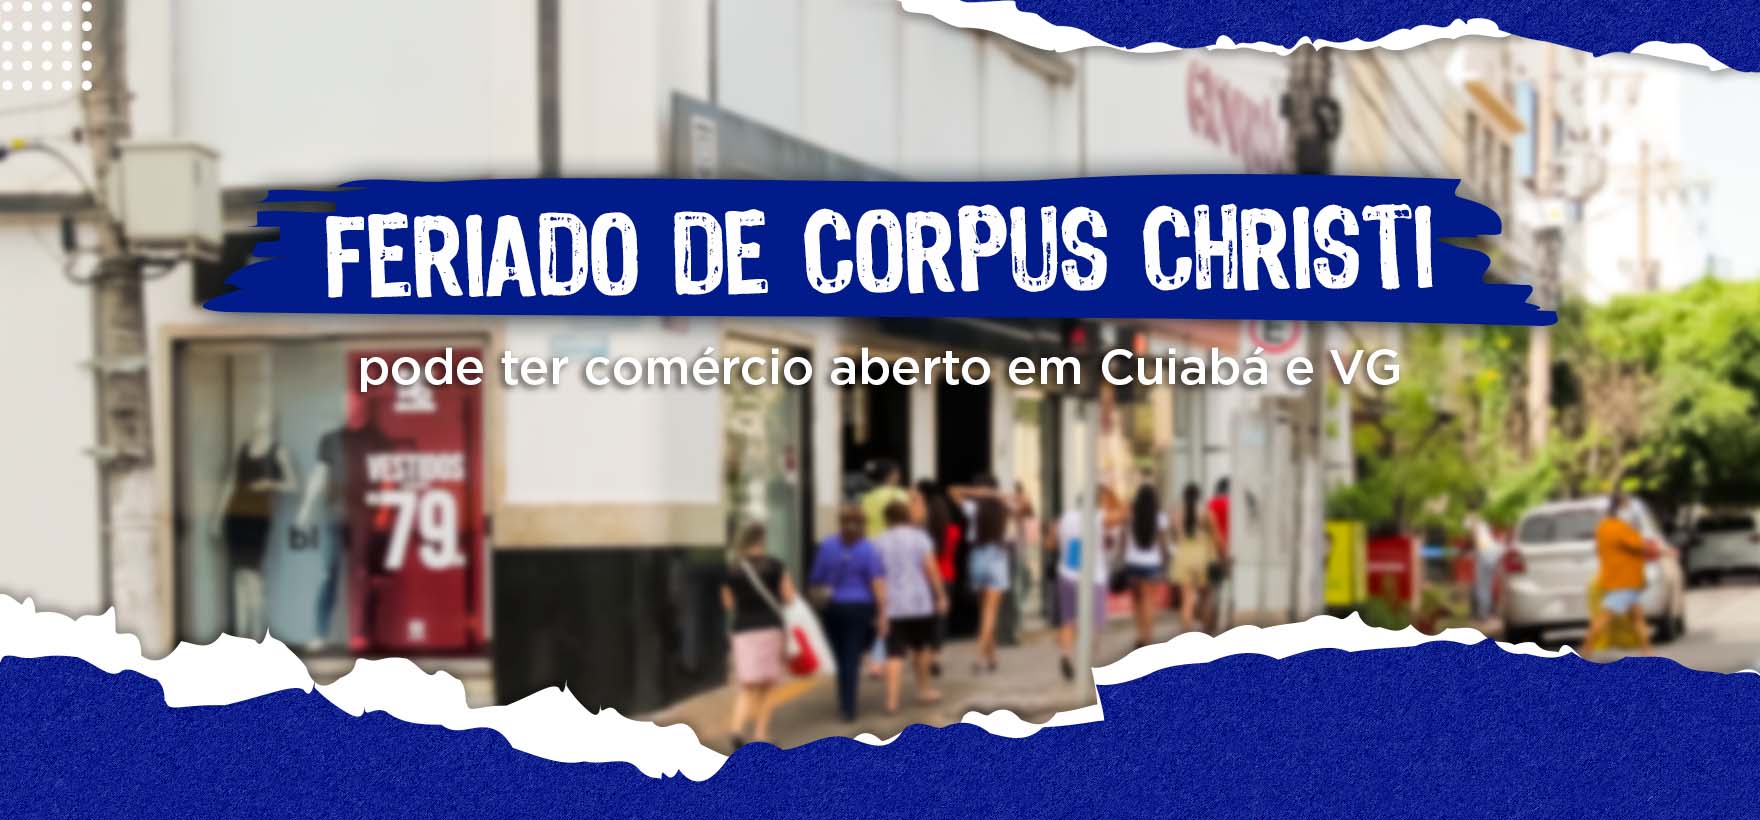 Feriado - Corpus Christi - Fecomércio-MT - Cuiabá - Várzea Grande